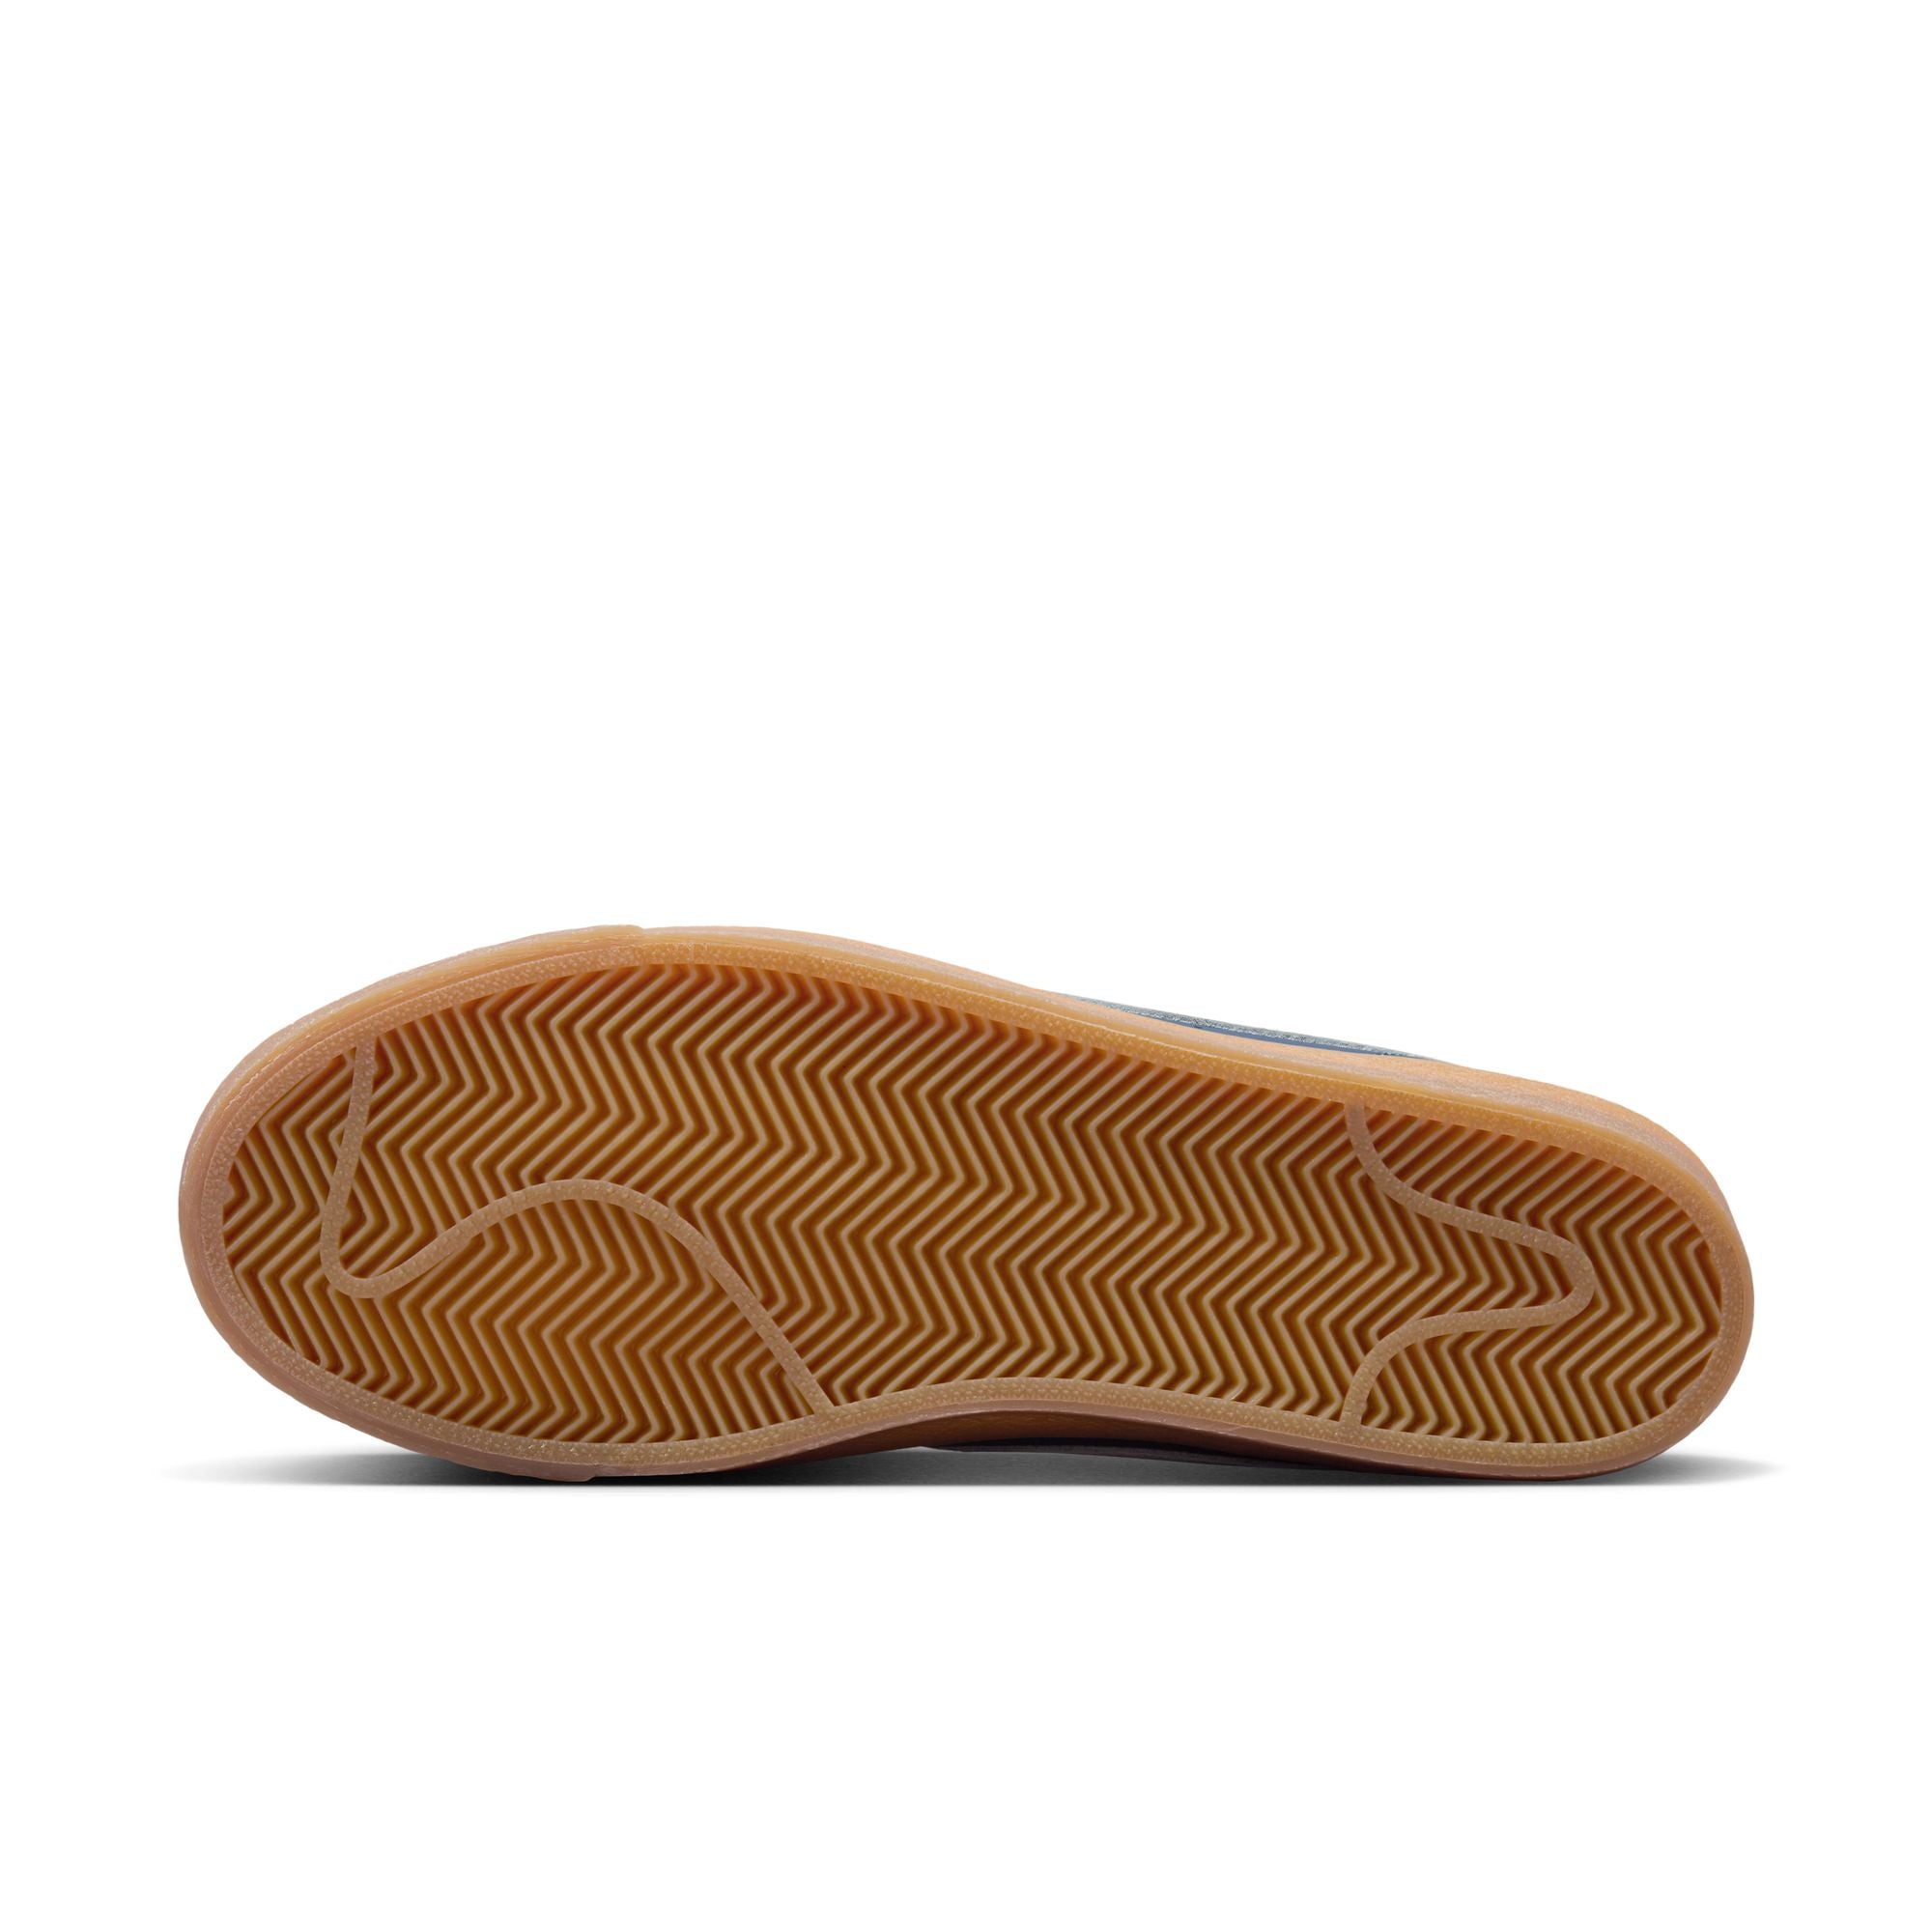 Nike SB ISO Zoom Blazer Mid Shoes - Navy/White-Gum-Light Brown